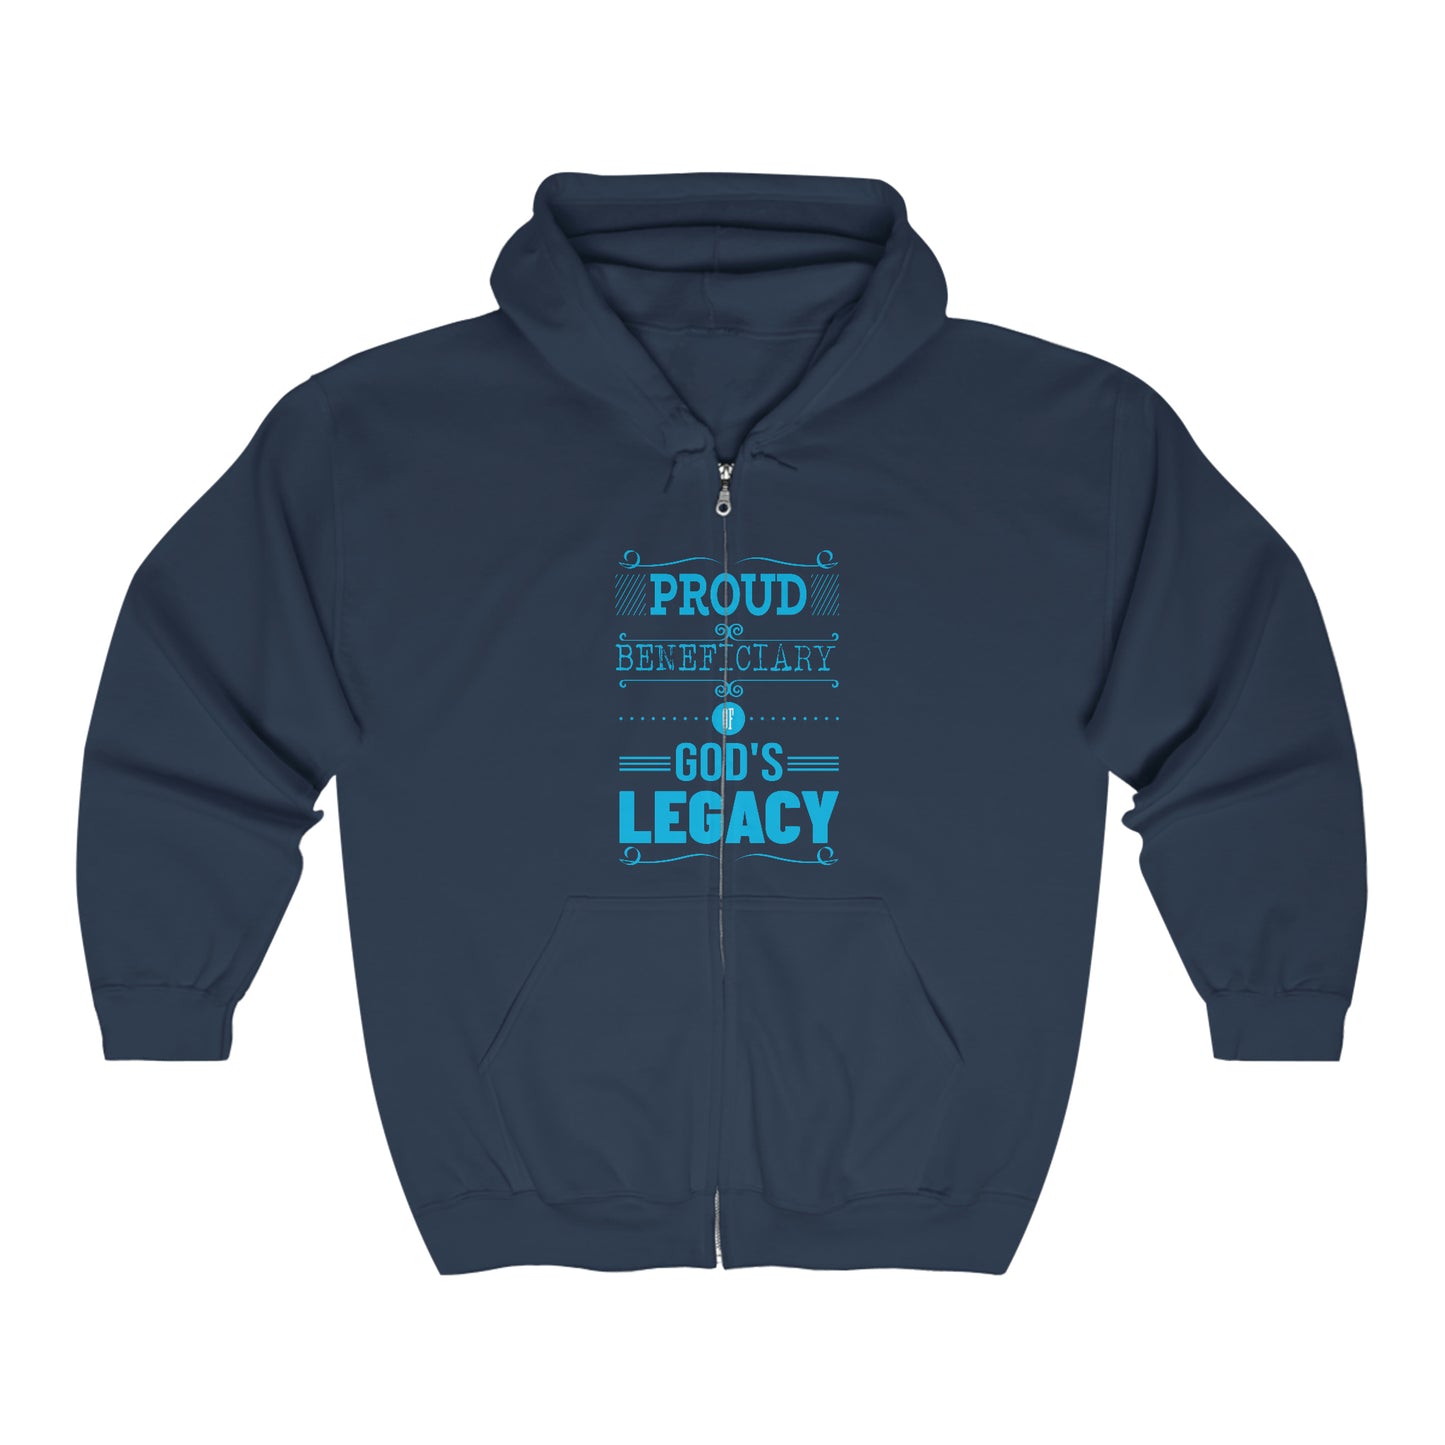 Proud Beneficiary Of God's Legacy Unisex Heavy Blend Full Zip Hooded Sweatshirt